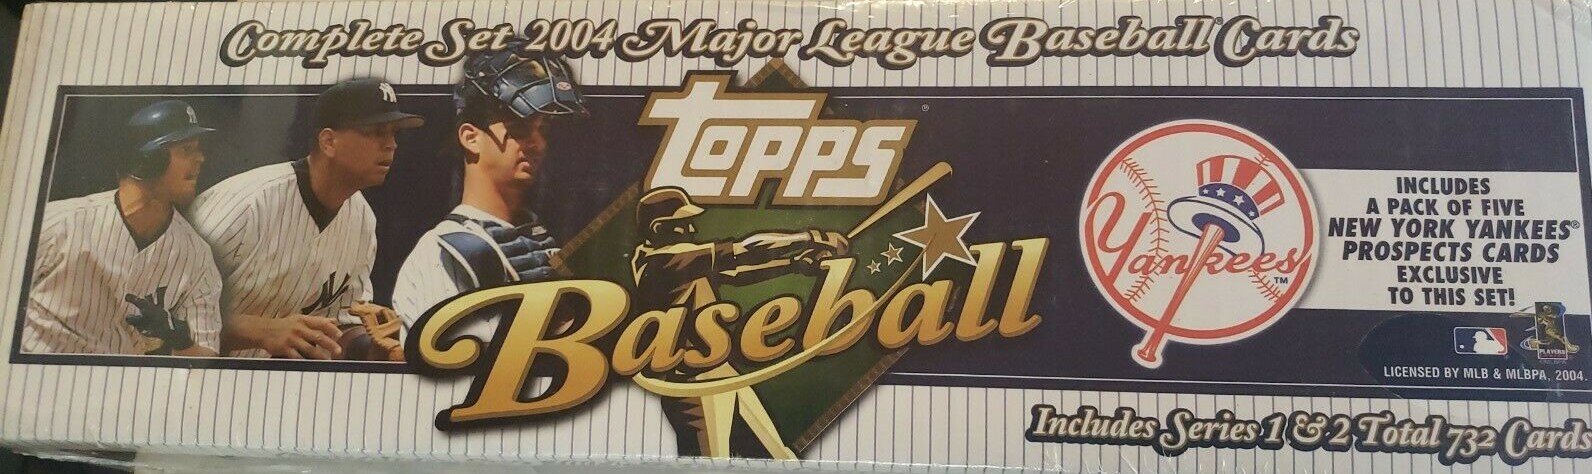 2004 Topps Baseball Card Factory Set Yankees Version